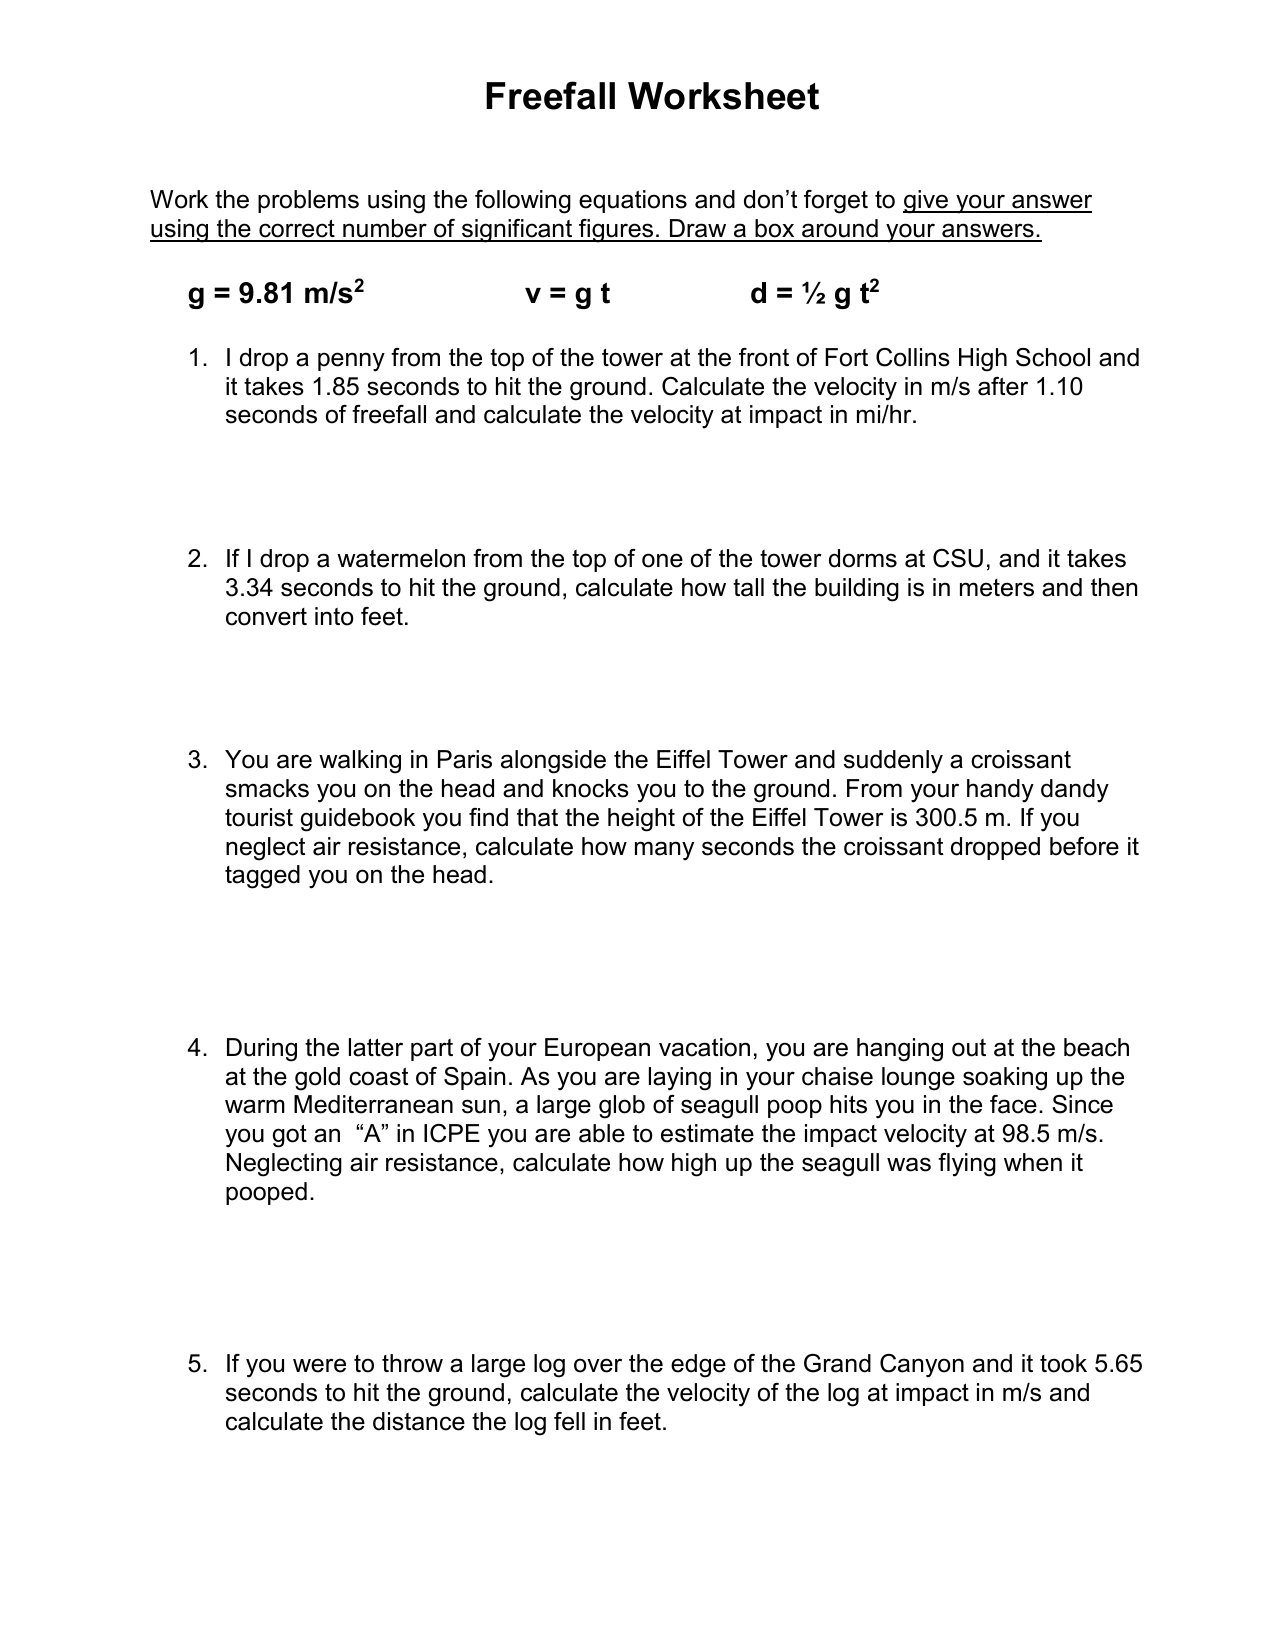 Freefall Worksheet (11) Pertaining To Free Fall Problems Worksheet